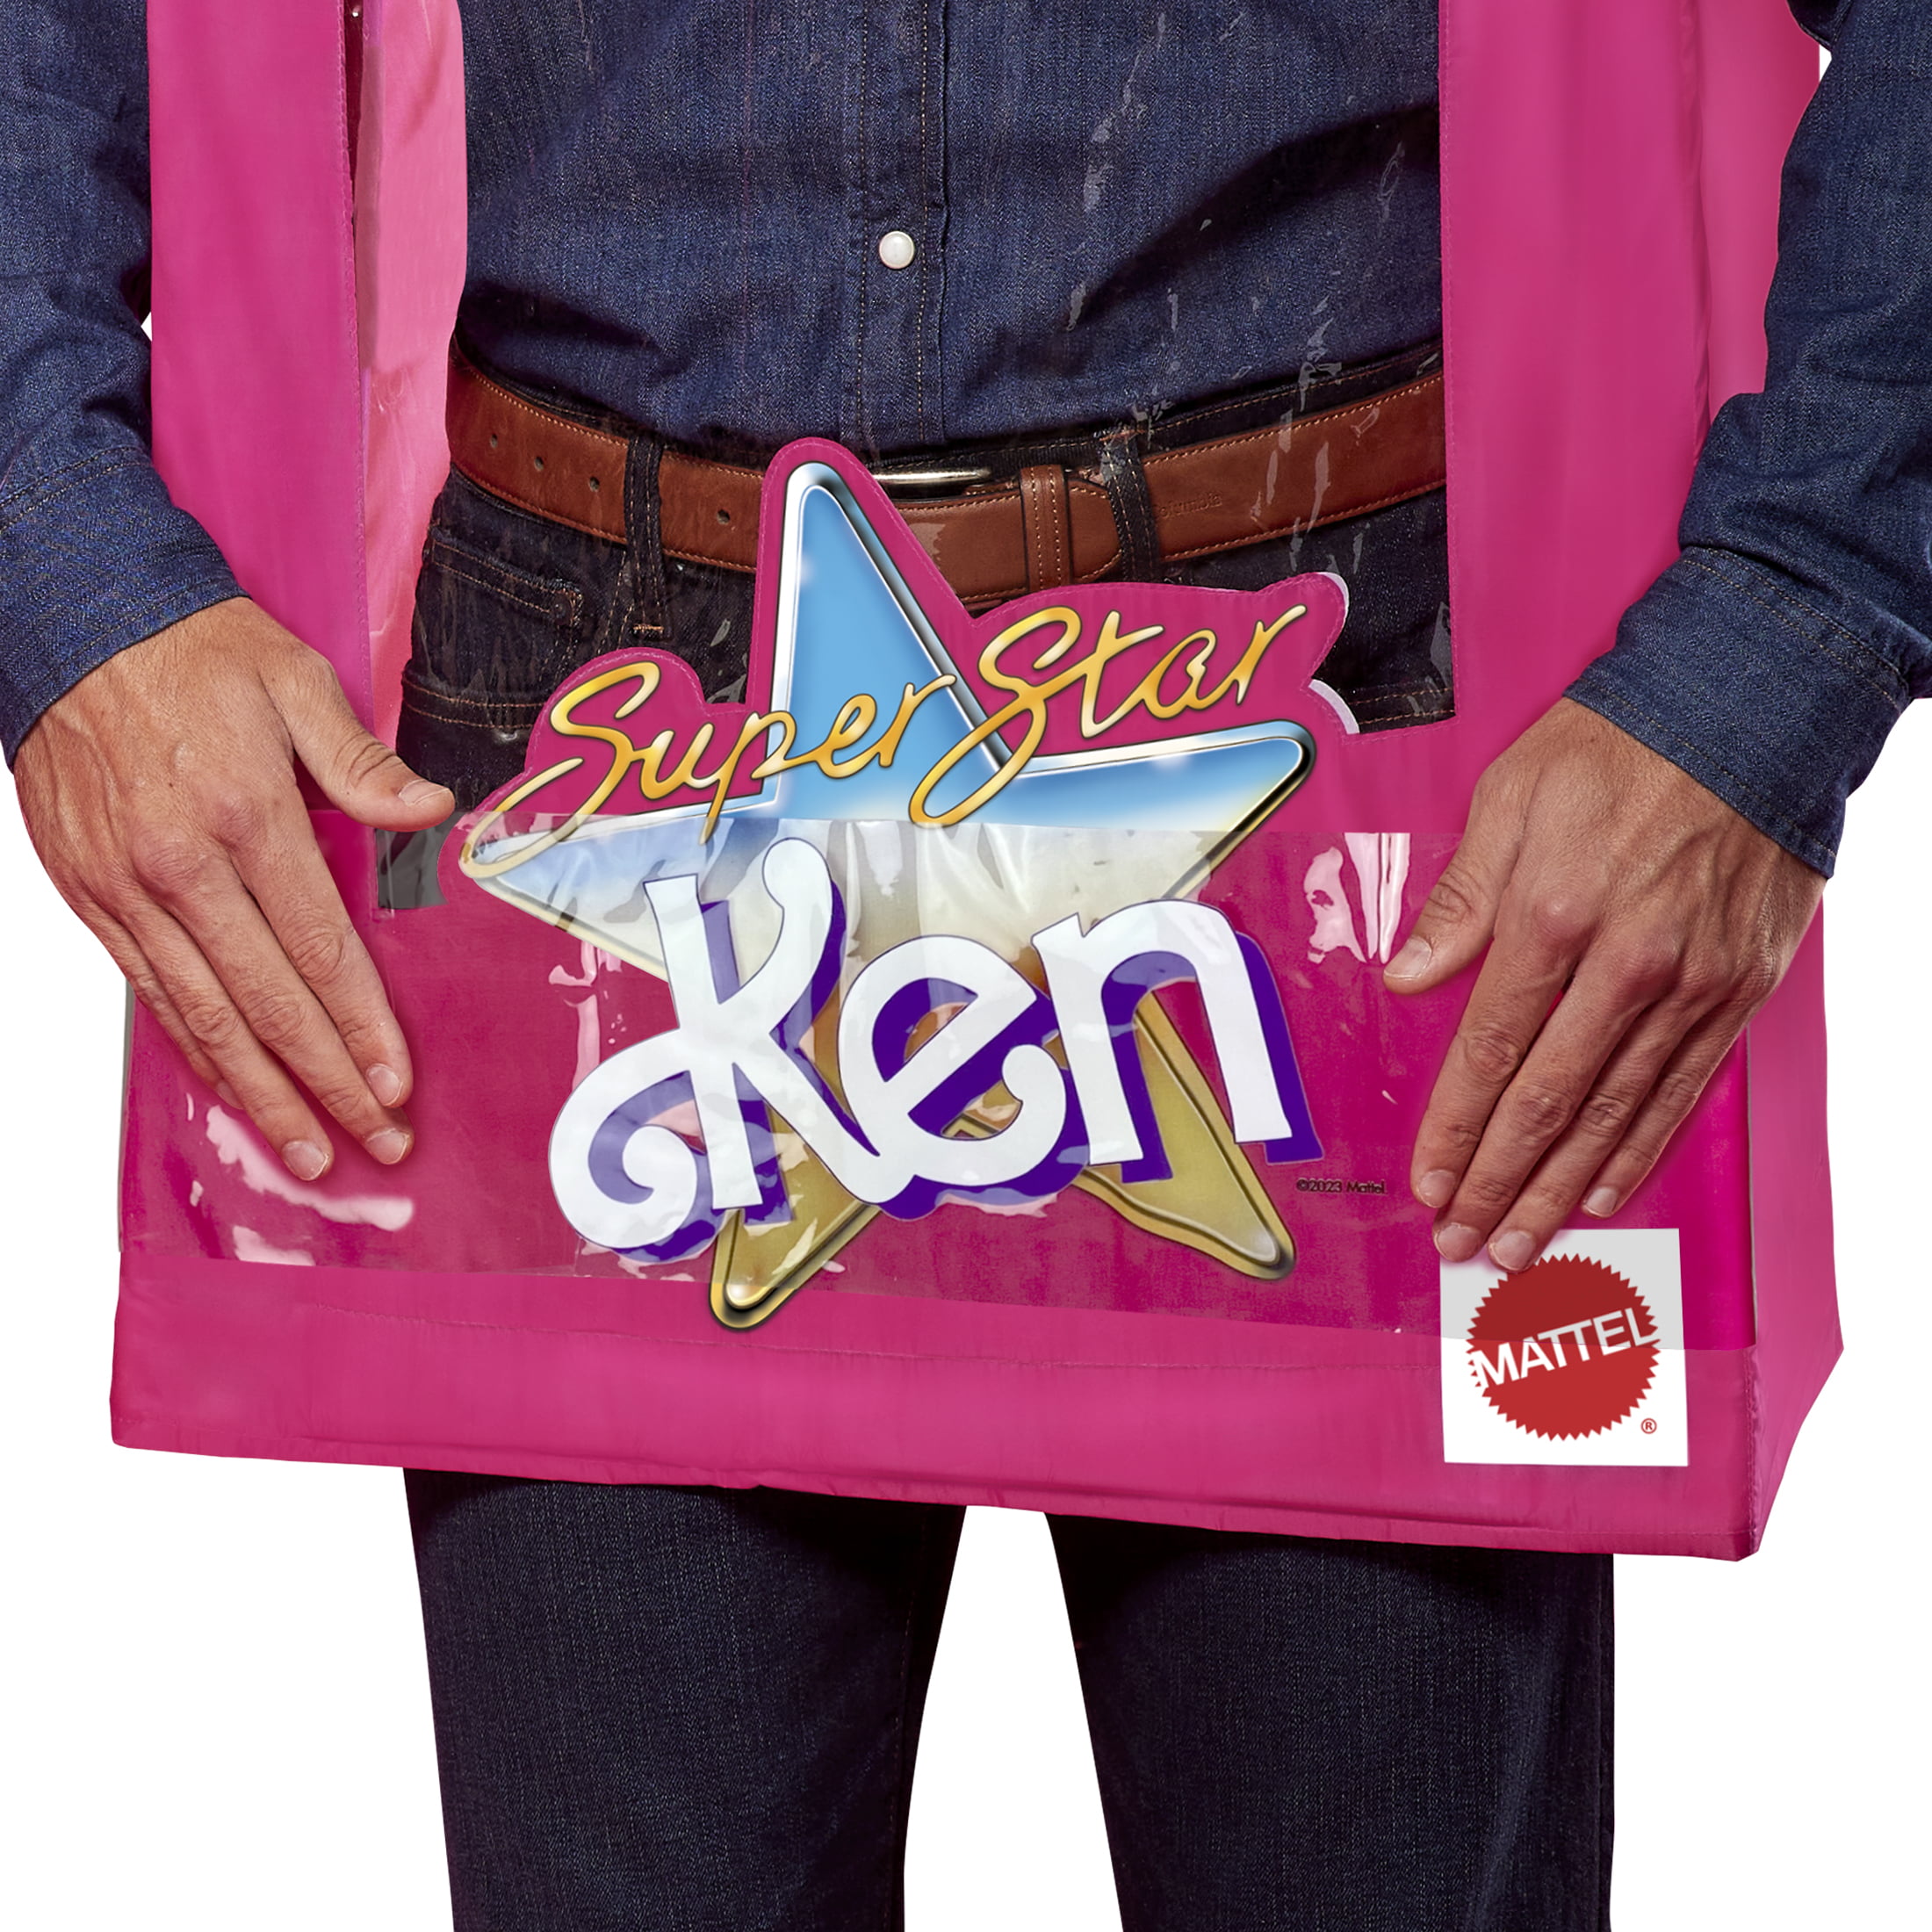 Adult Ken Box Costume - Barbie 